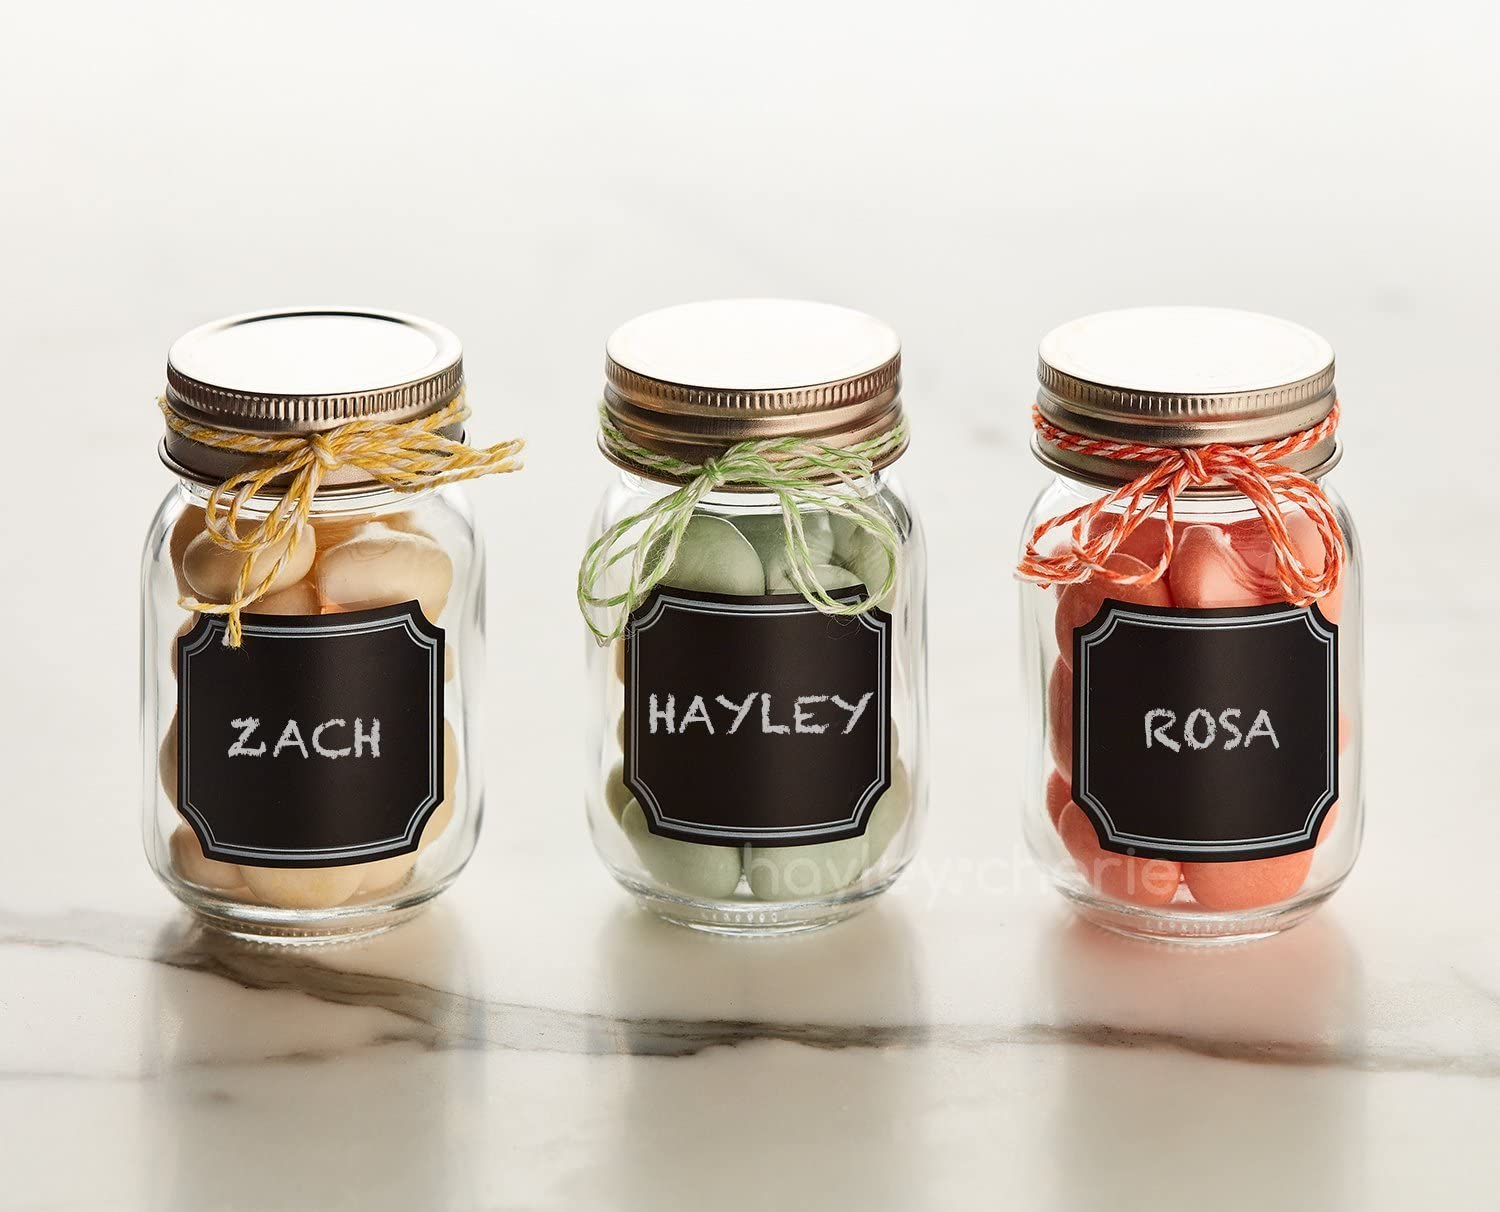 Hayley Cherie - 6 oz Large Square Glass Spice Jars Set of 10 - Chalkboard Labels